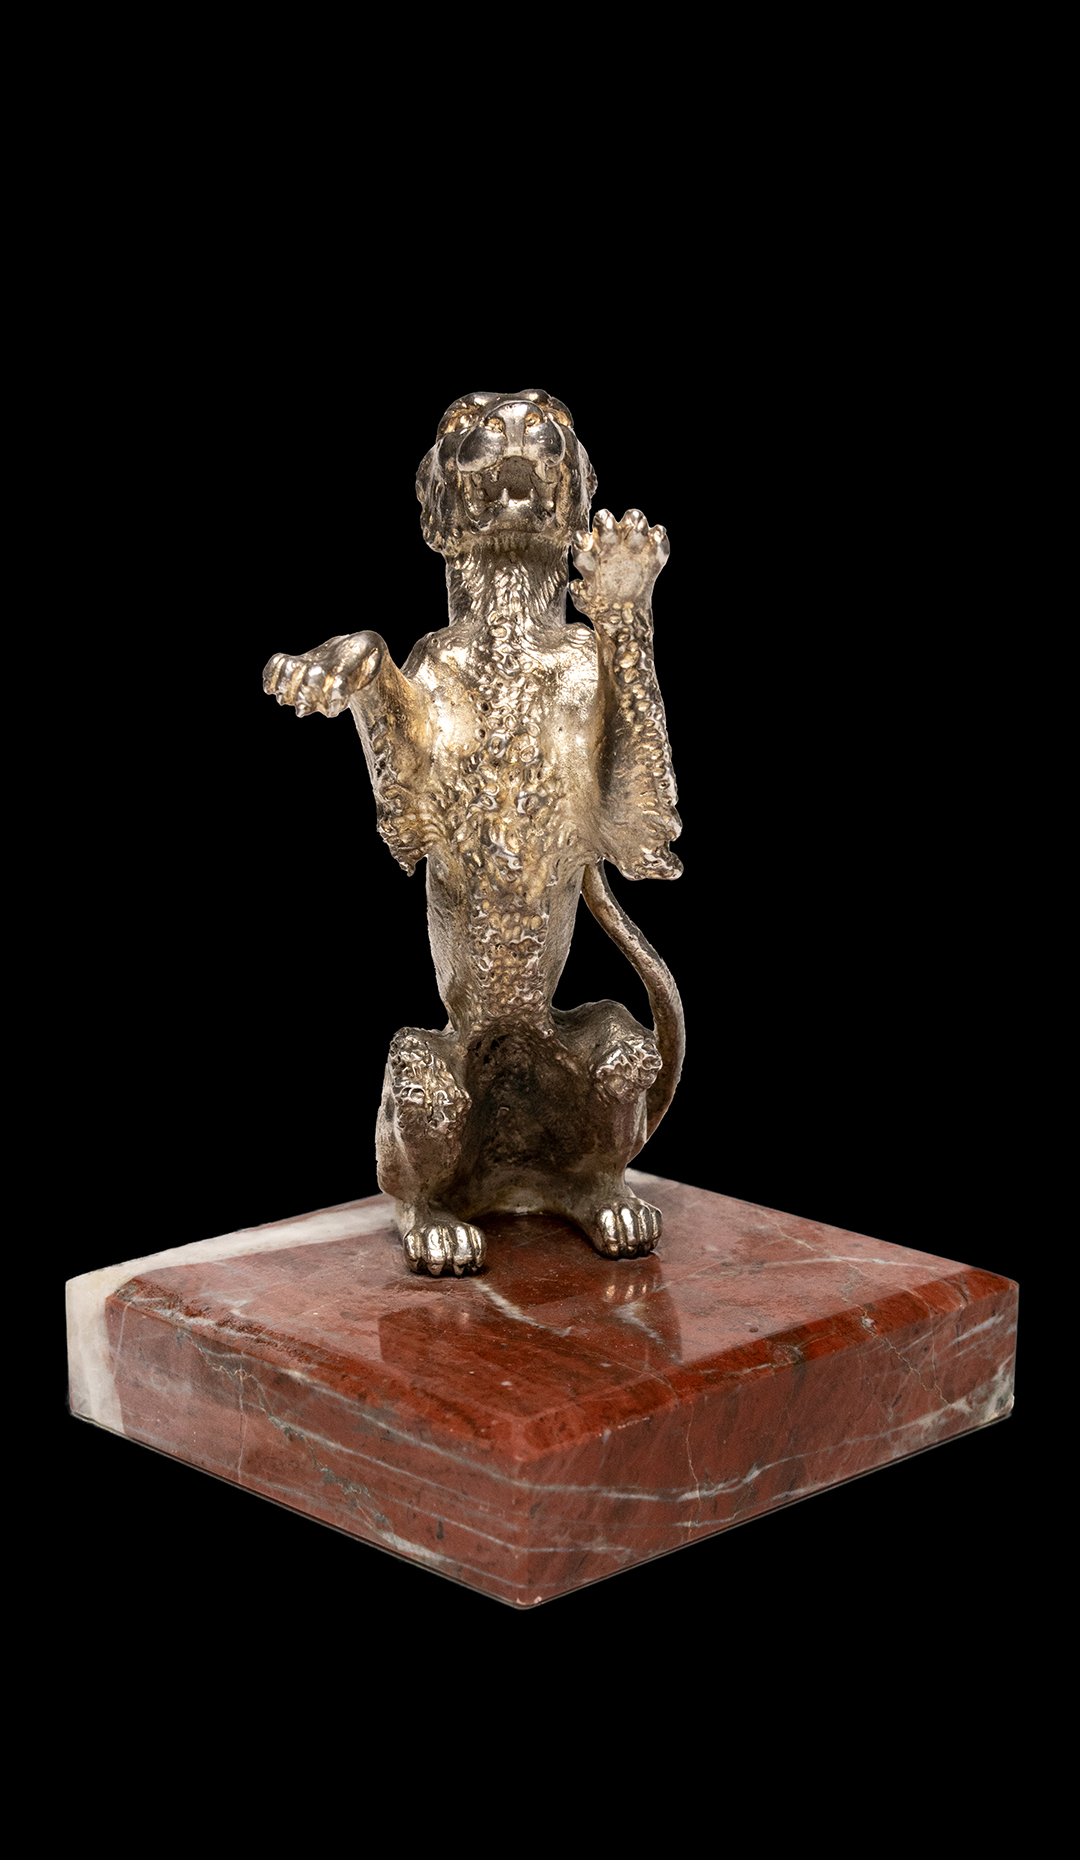 Car Radiator Ornament/Mascot of a Lioness Stamped Odiot, Paris